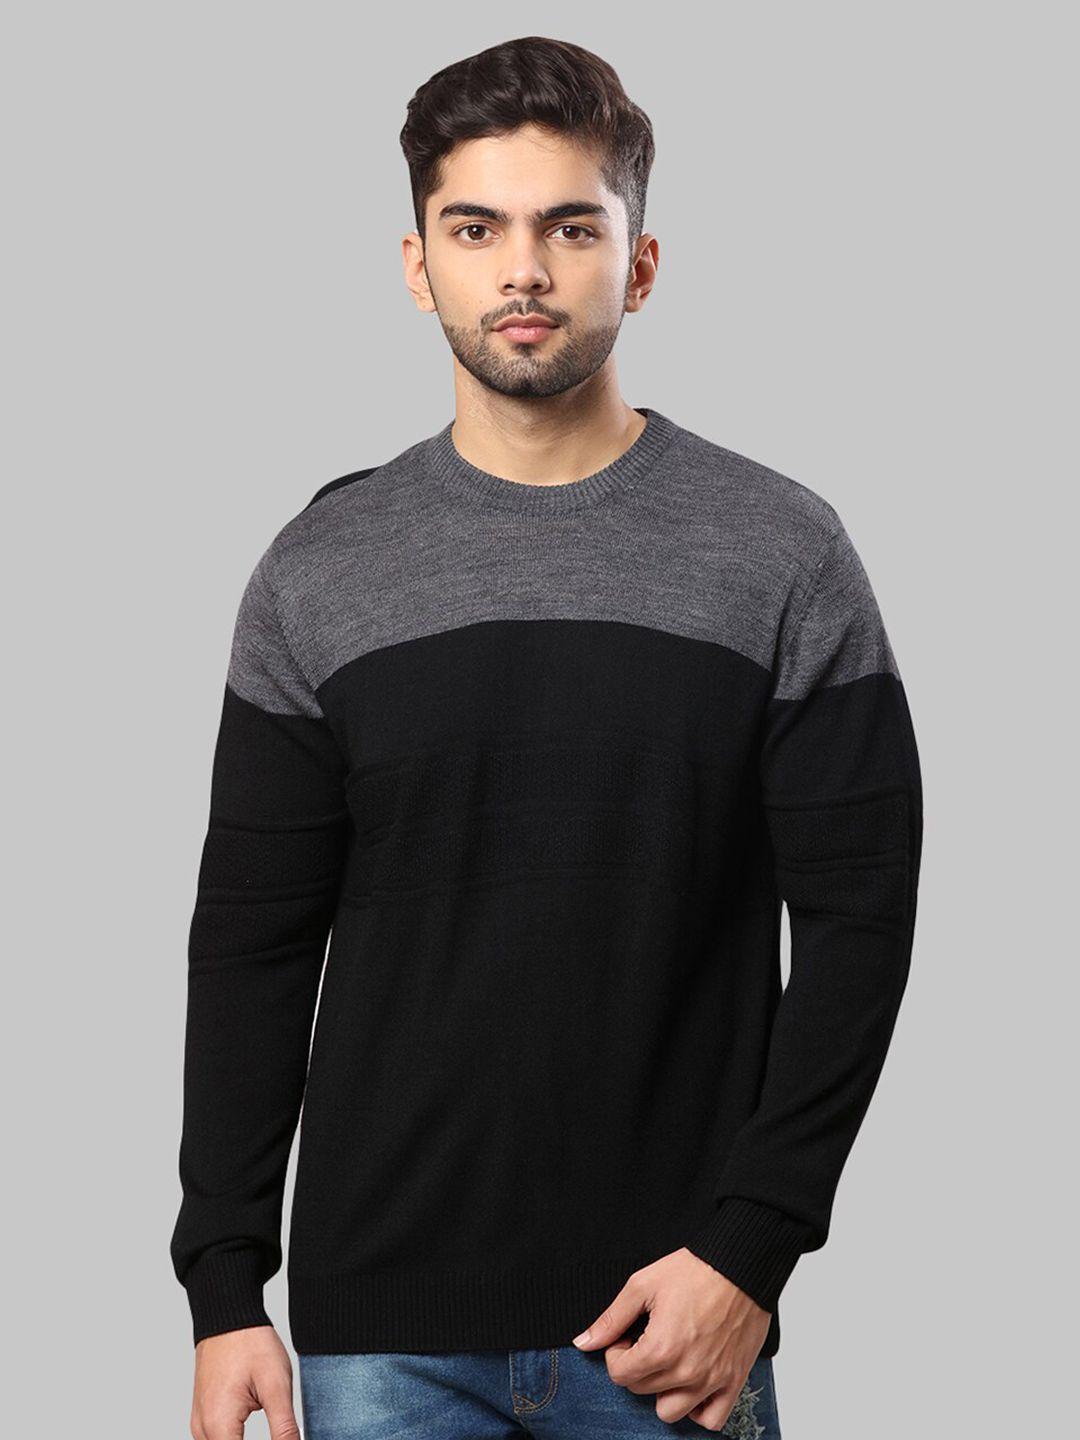 raymond men black & grey colourblocked pullover